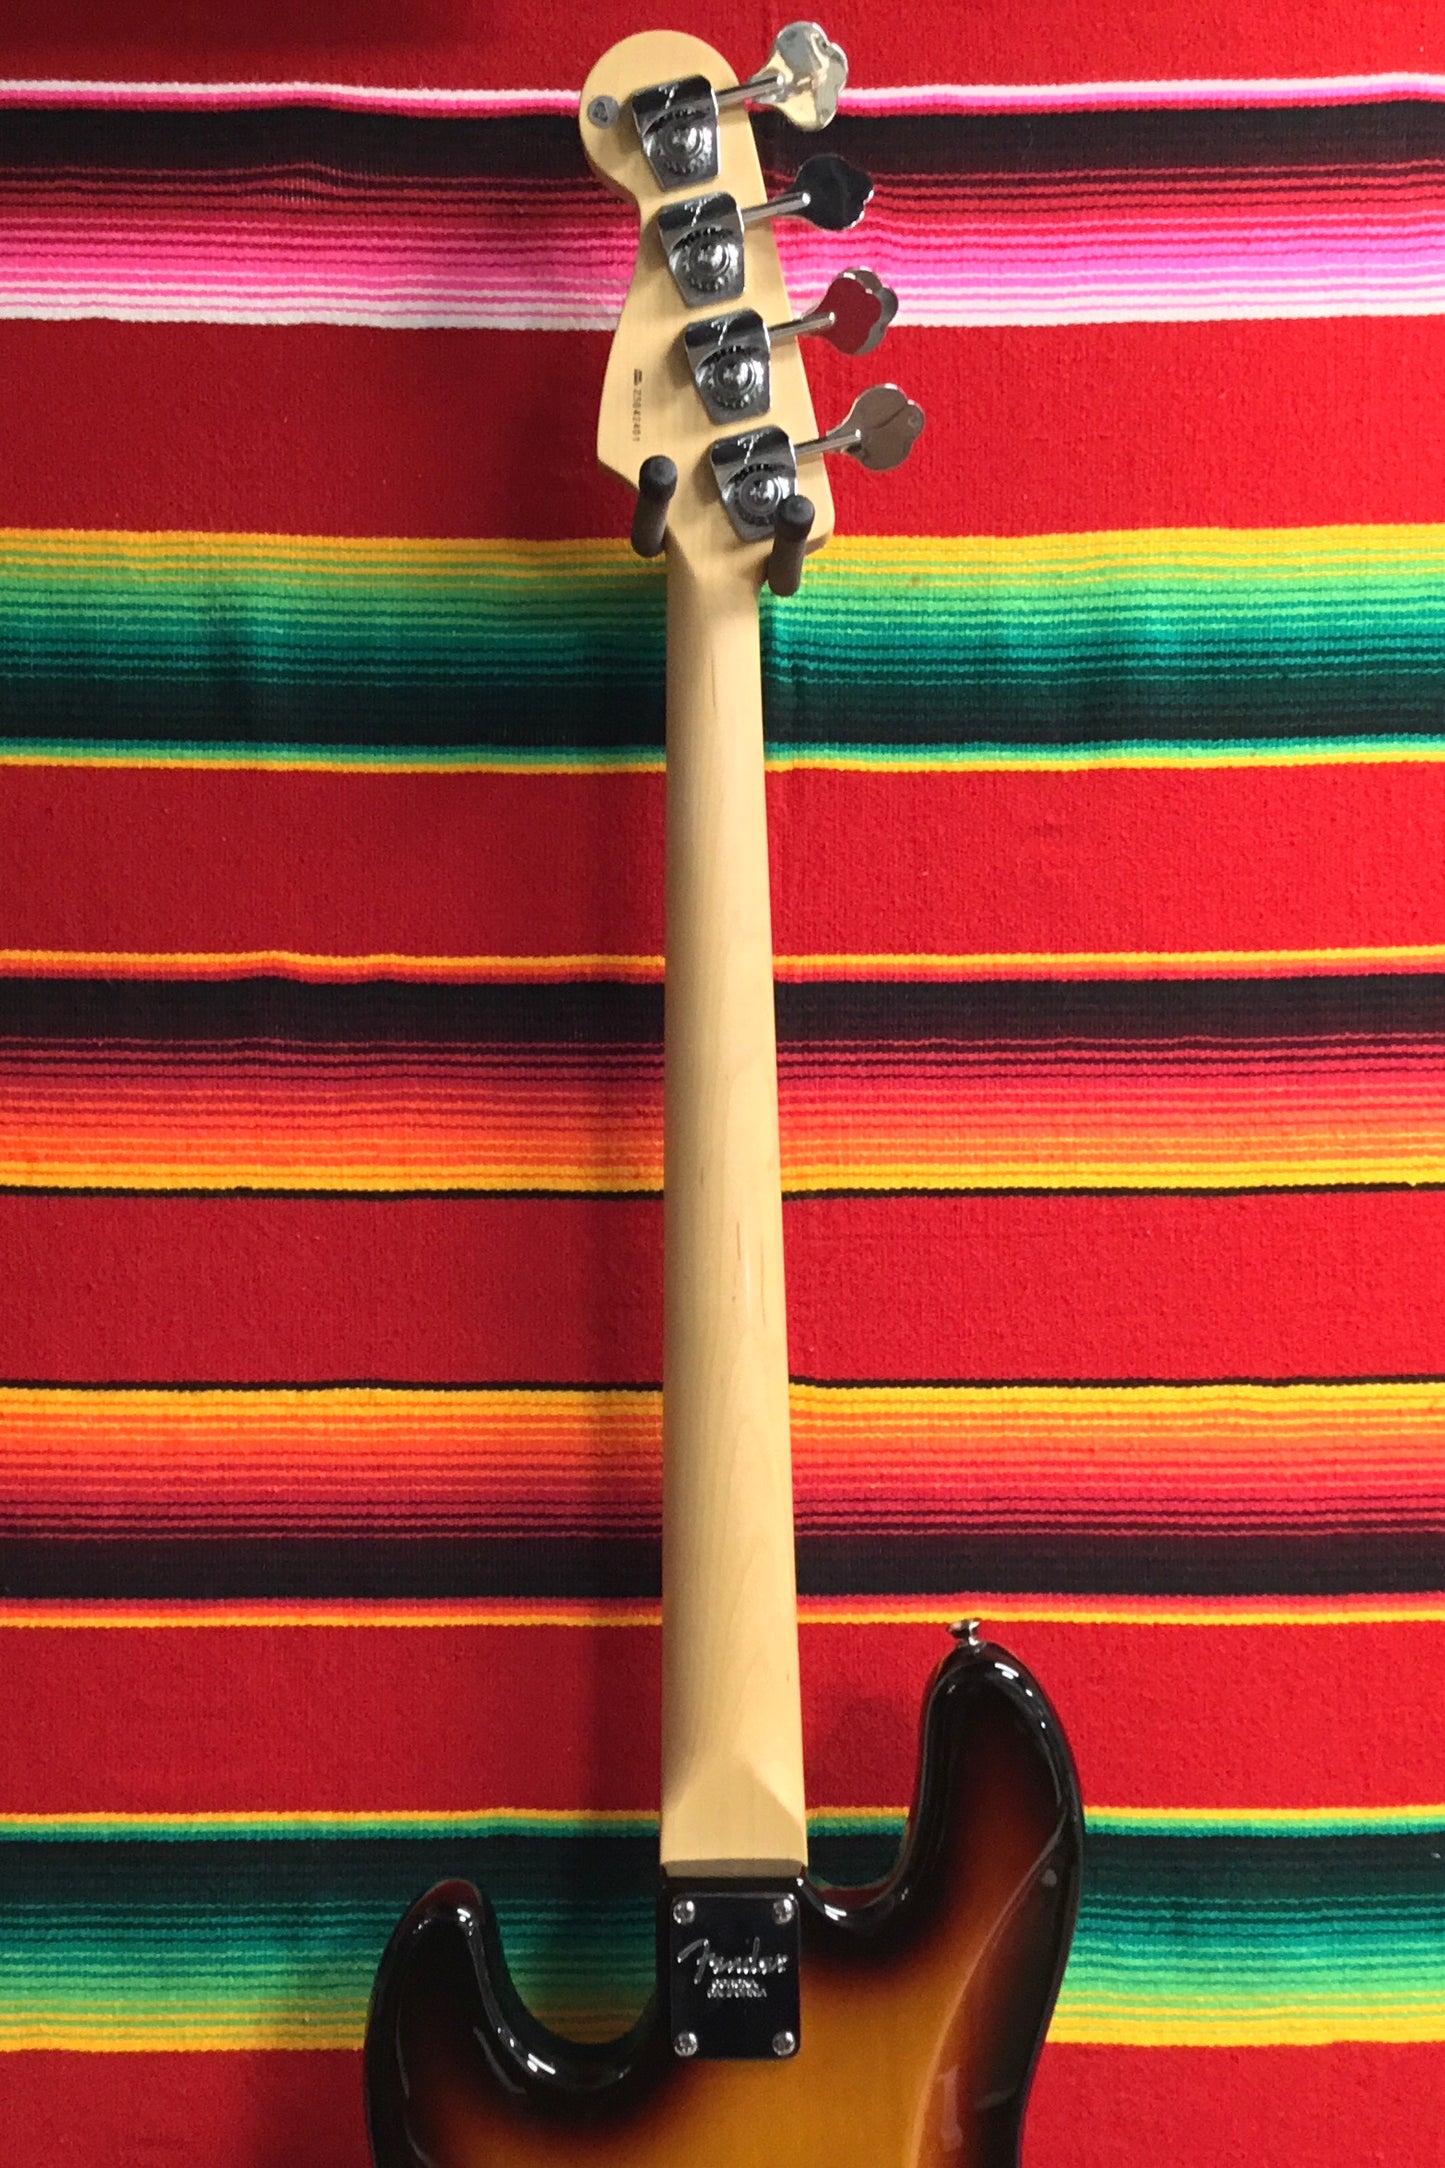 Fender American Jazz Bass in Sunburst (2005)